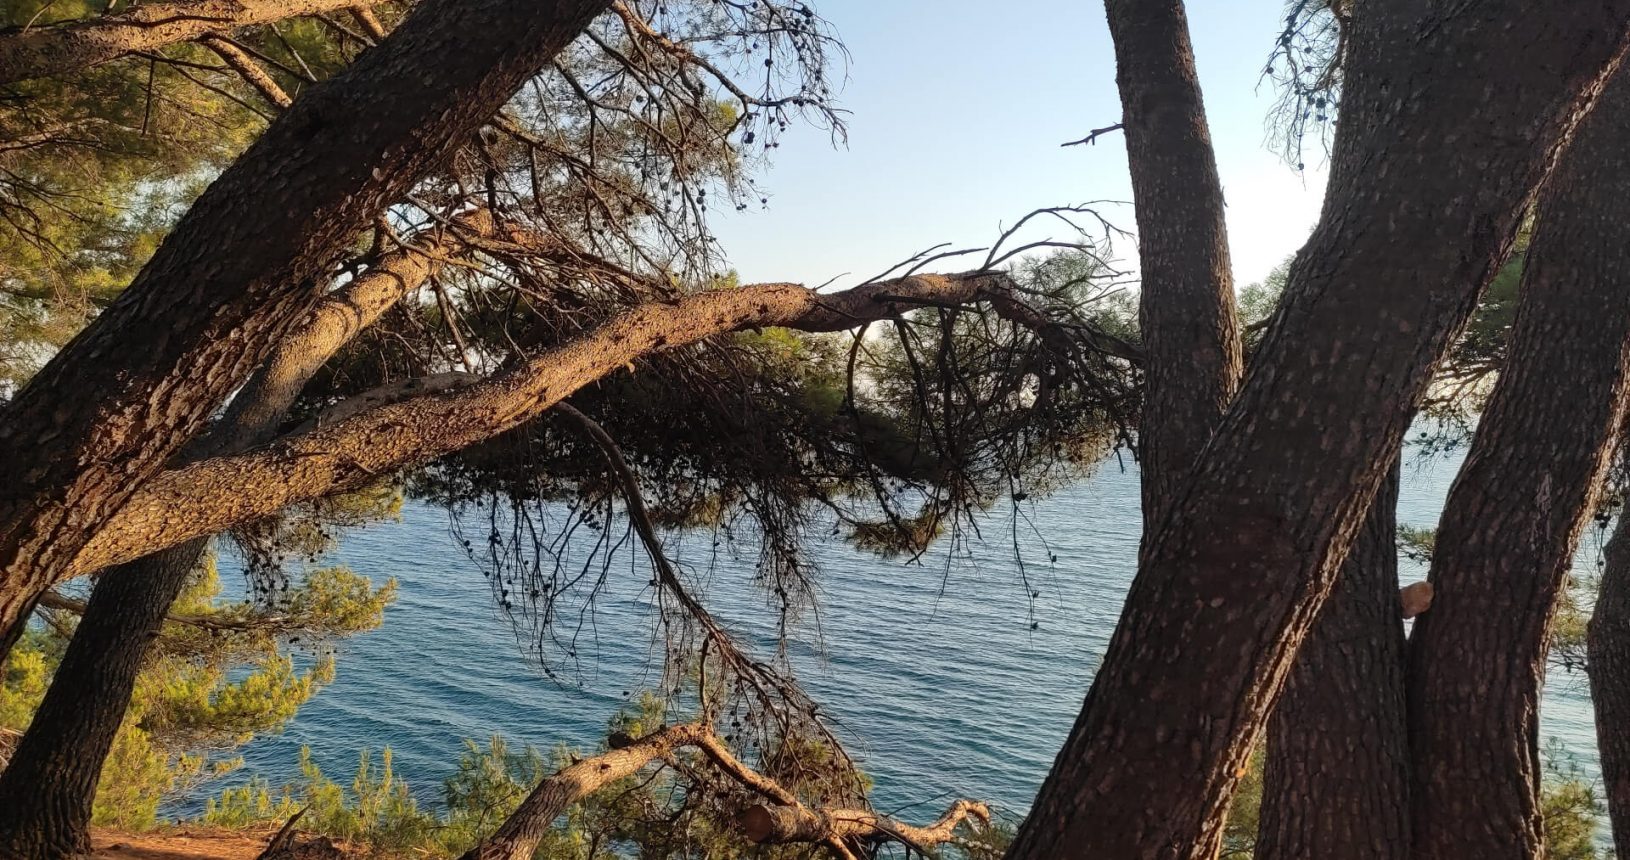 Intertwined trees at Ulcinj hiking trail